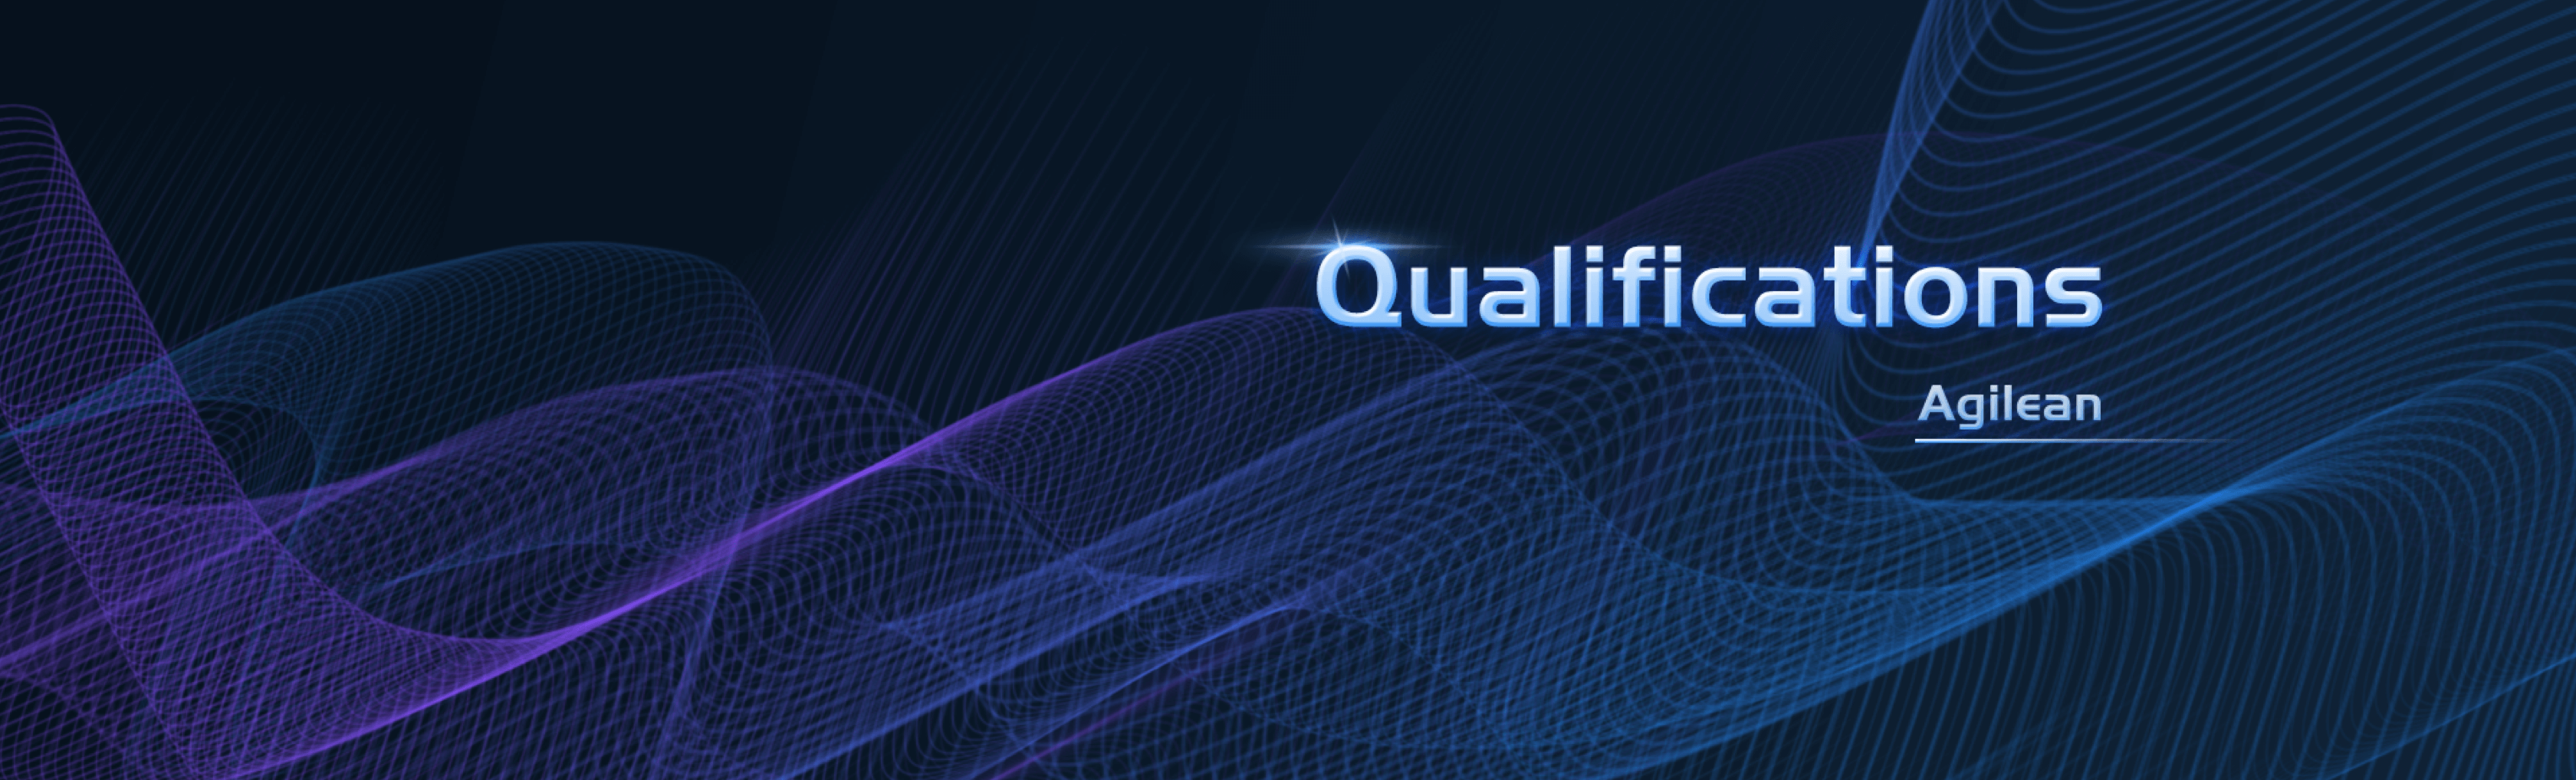 qualification banner